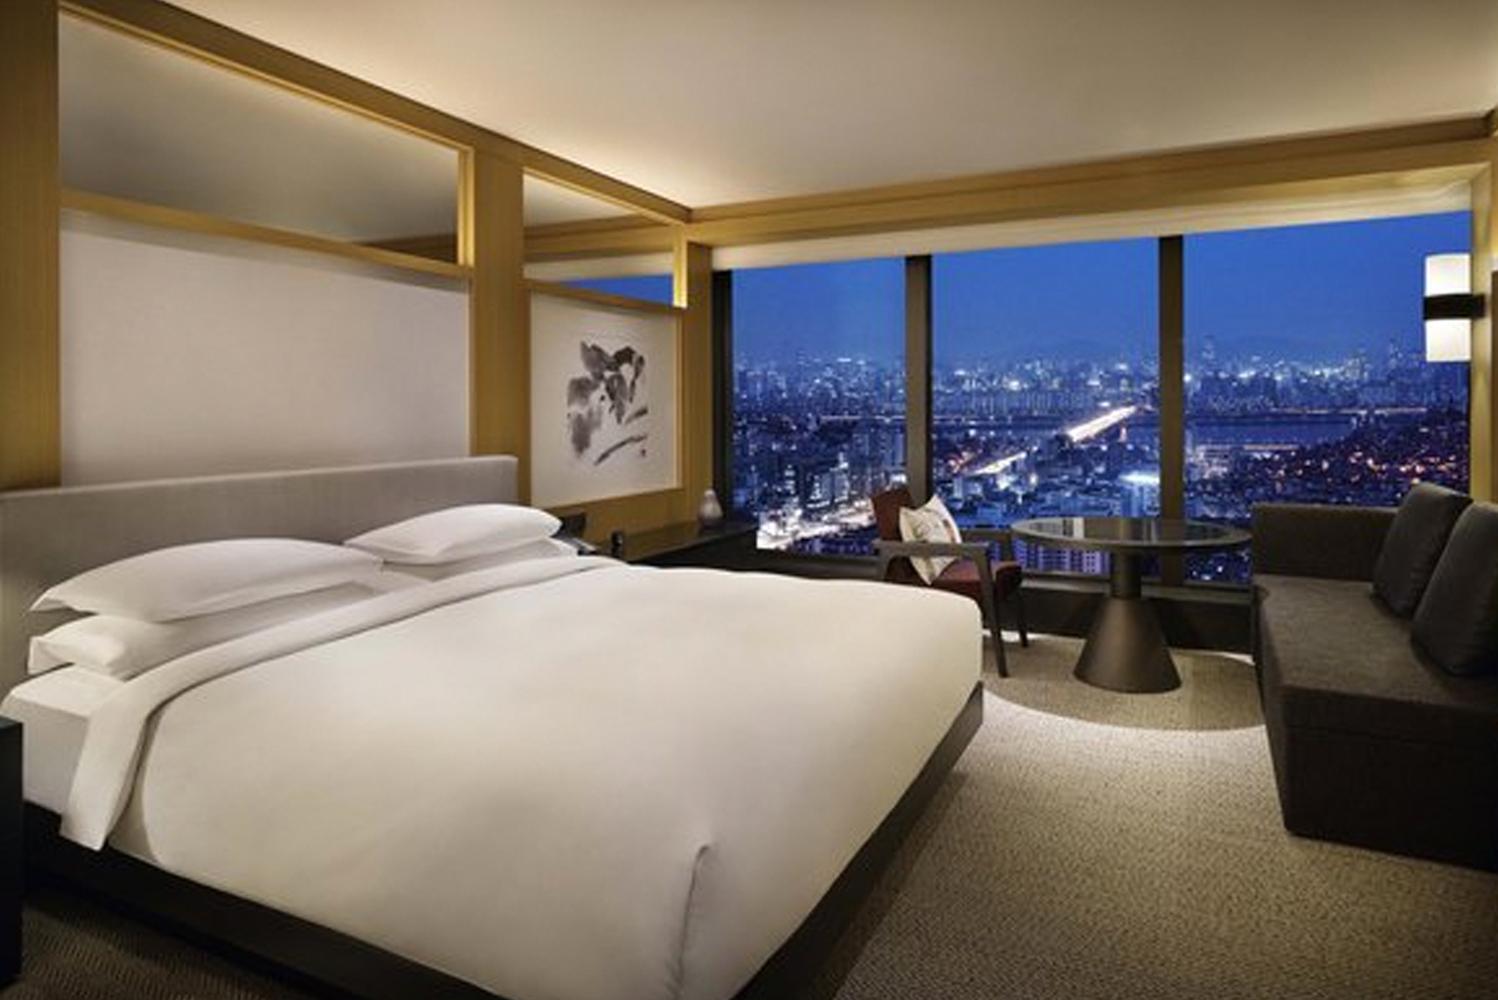 Bar Studio renovates Grand Hyatt Seouls guestrooms and suites to maximize the panoramic city vistas